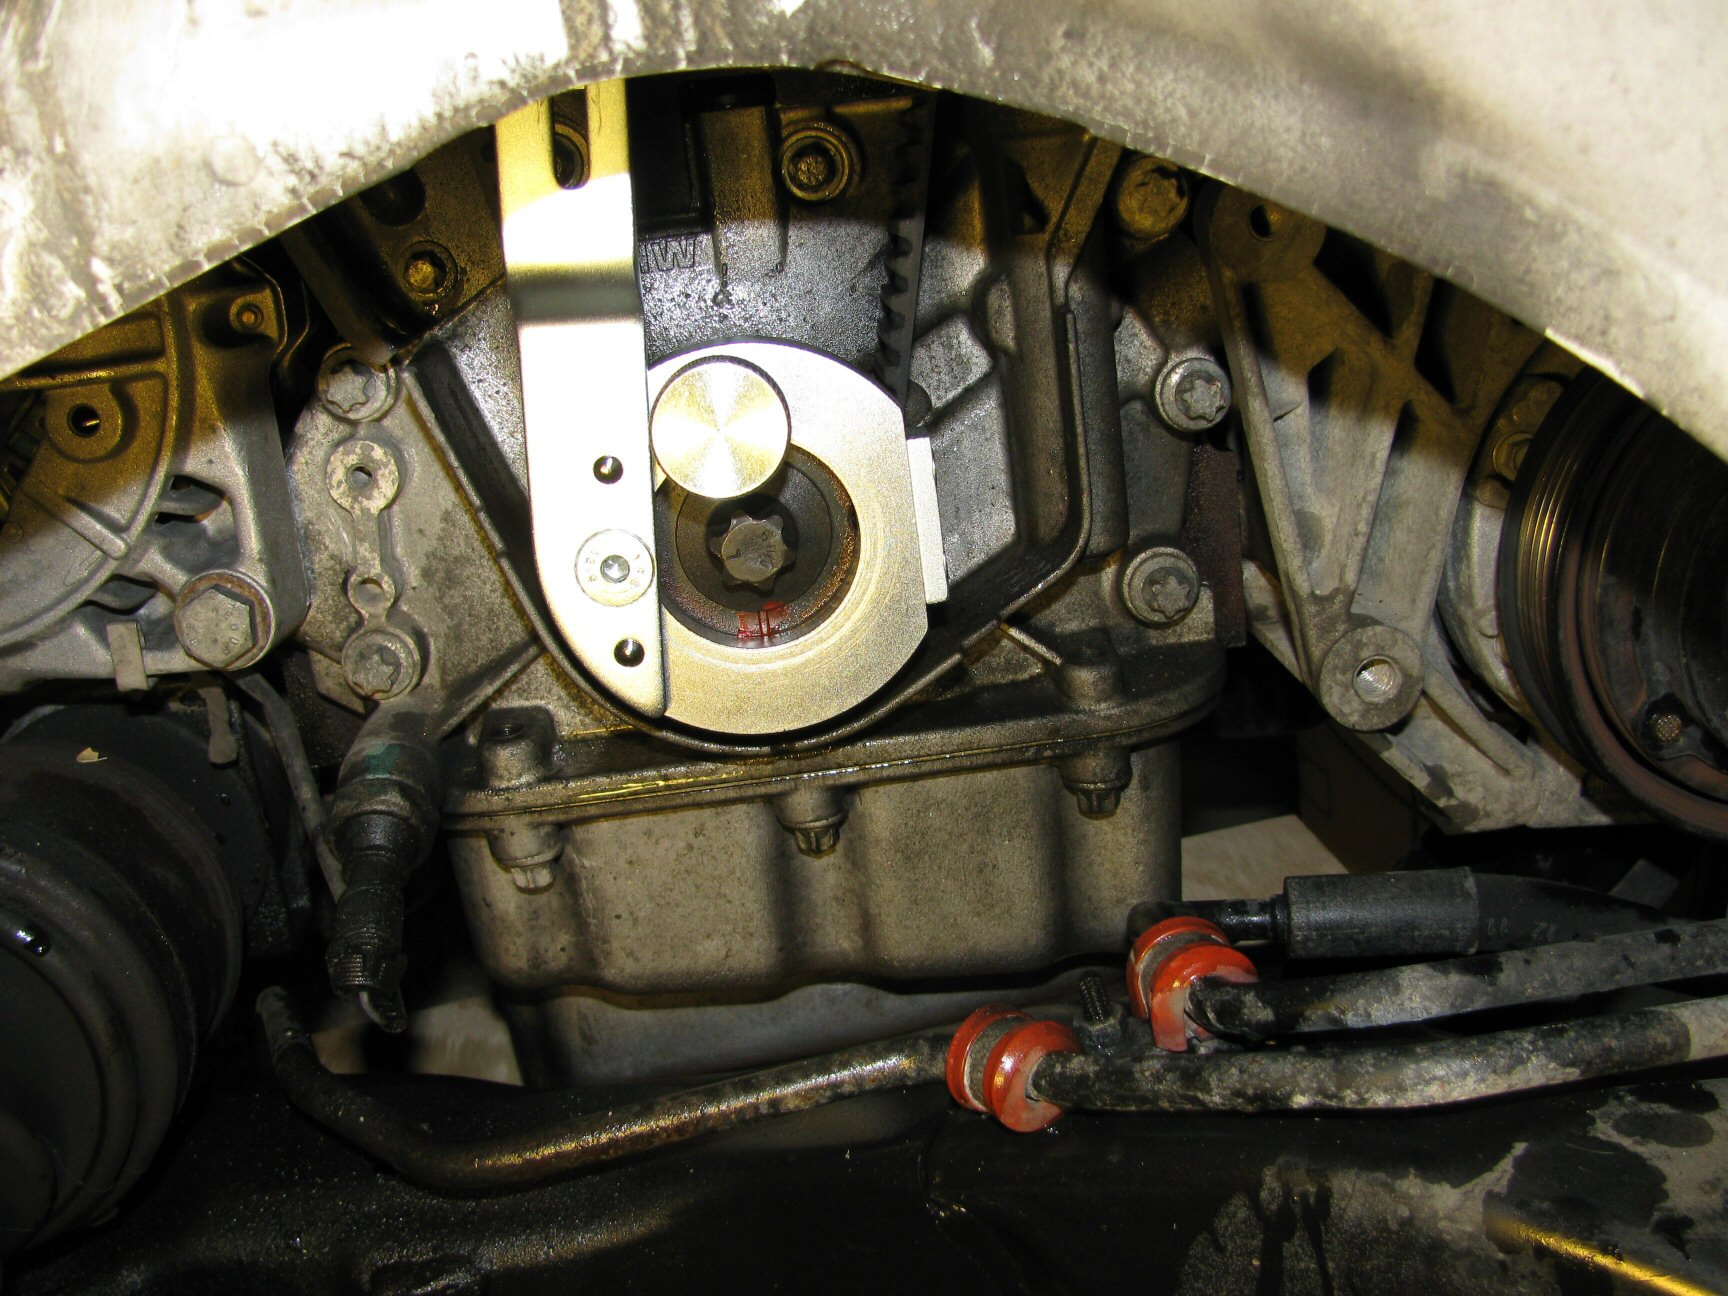 Notch on crankshaft pulley hub aligned with notch on engine block.